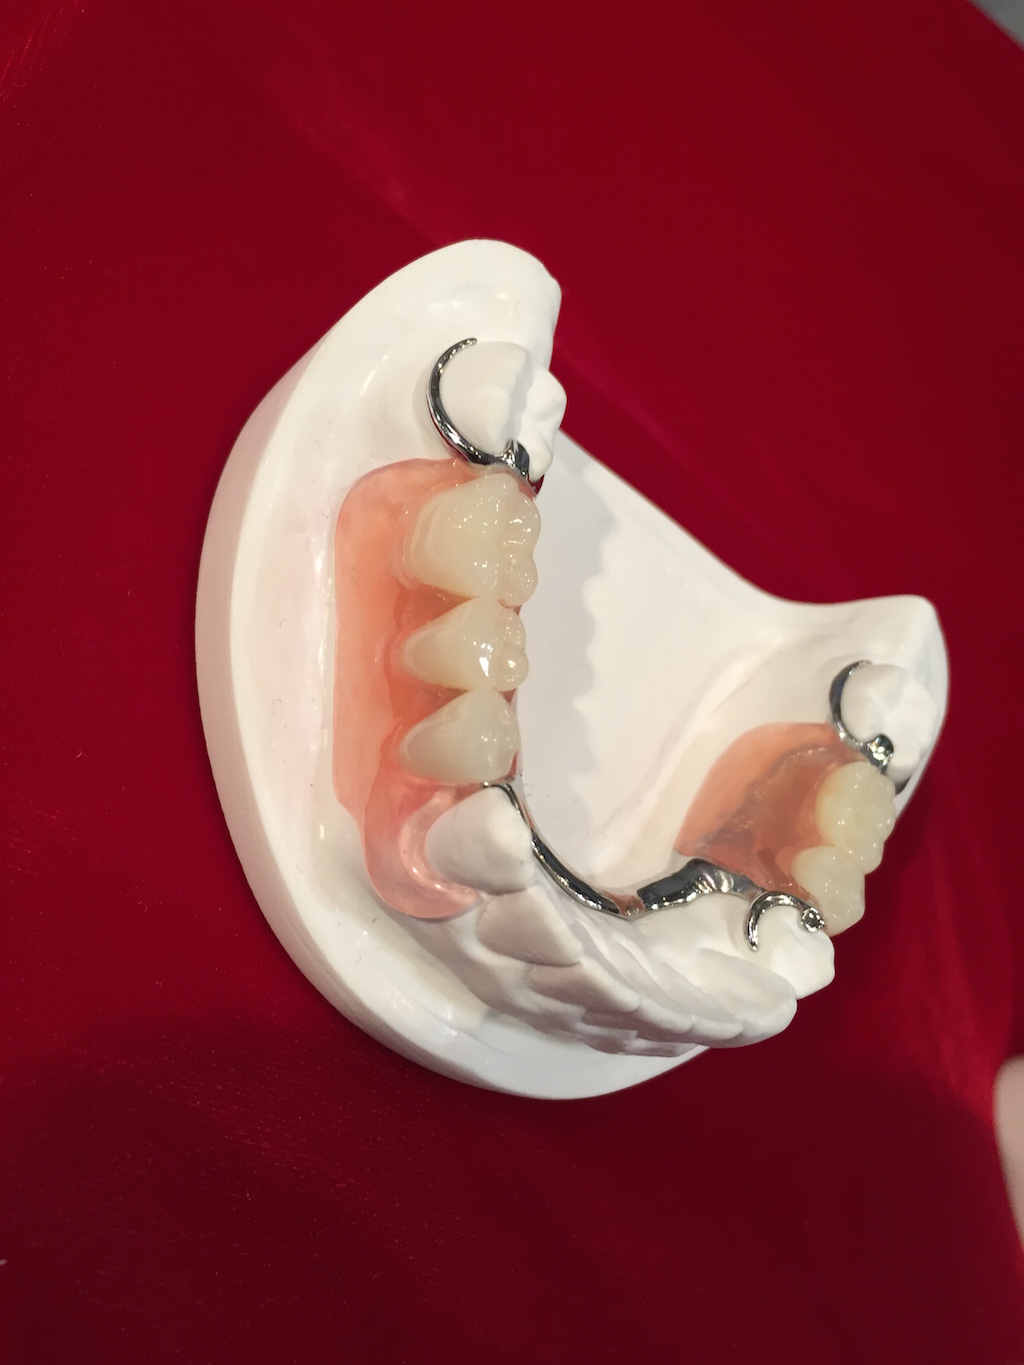 partial denture